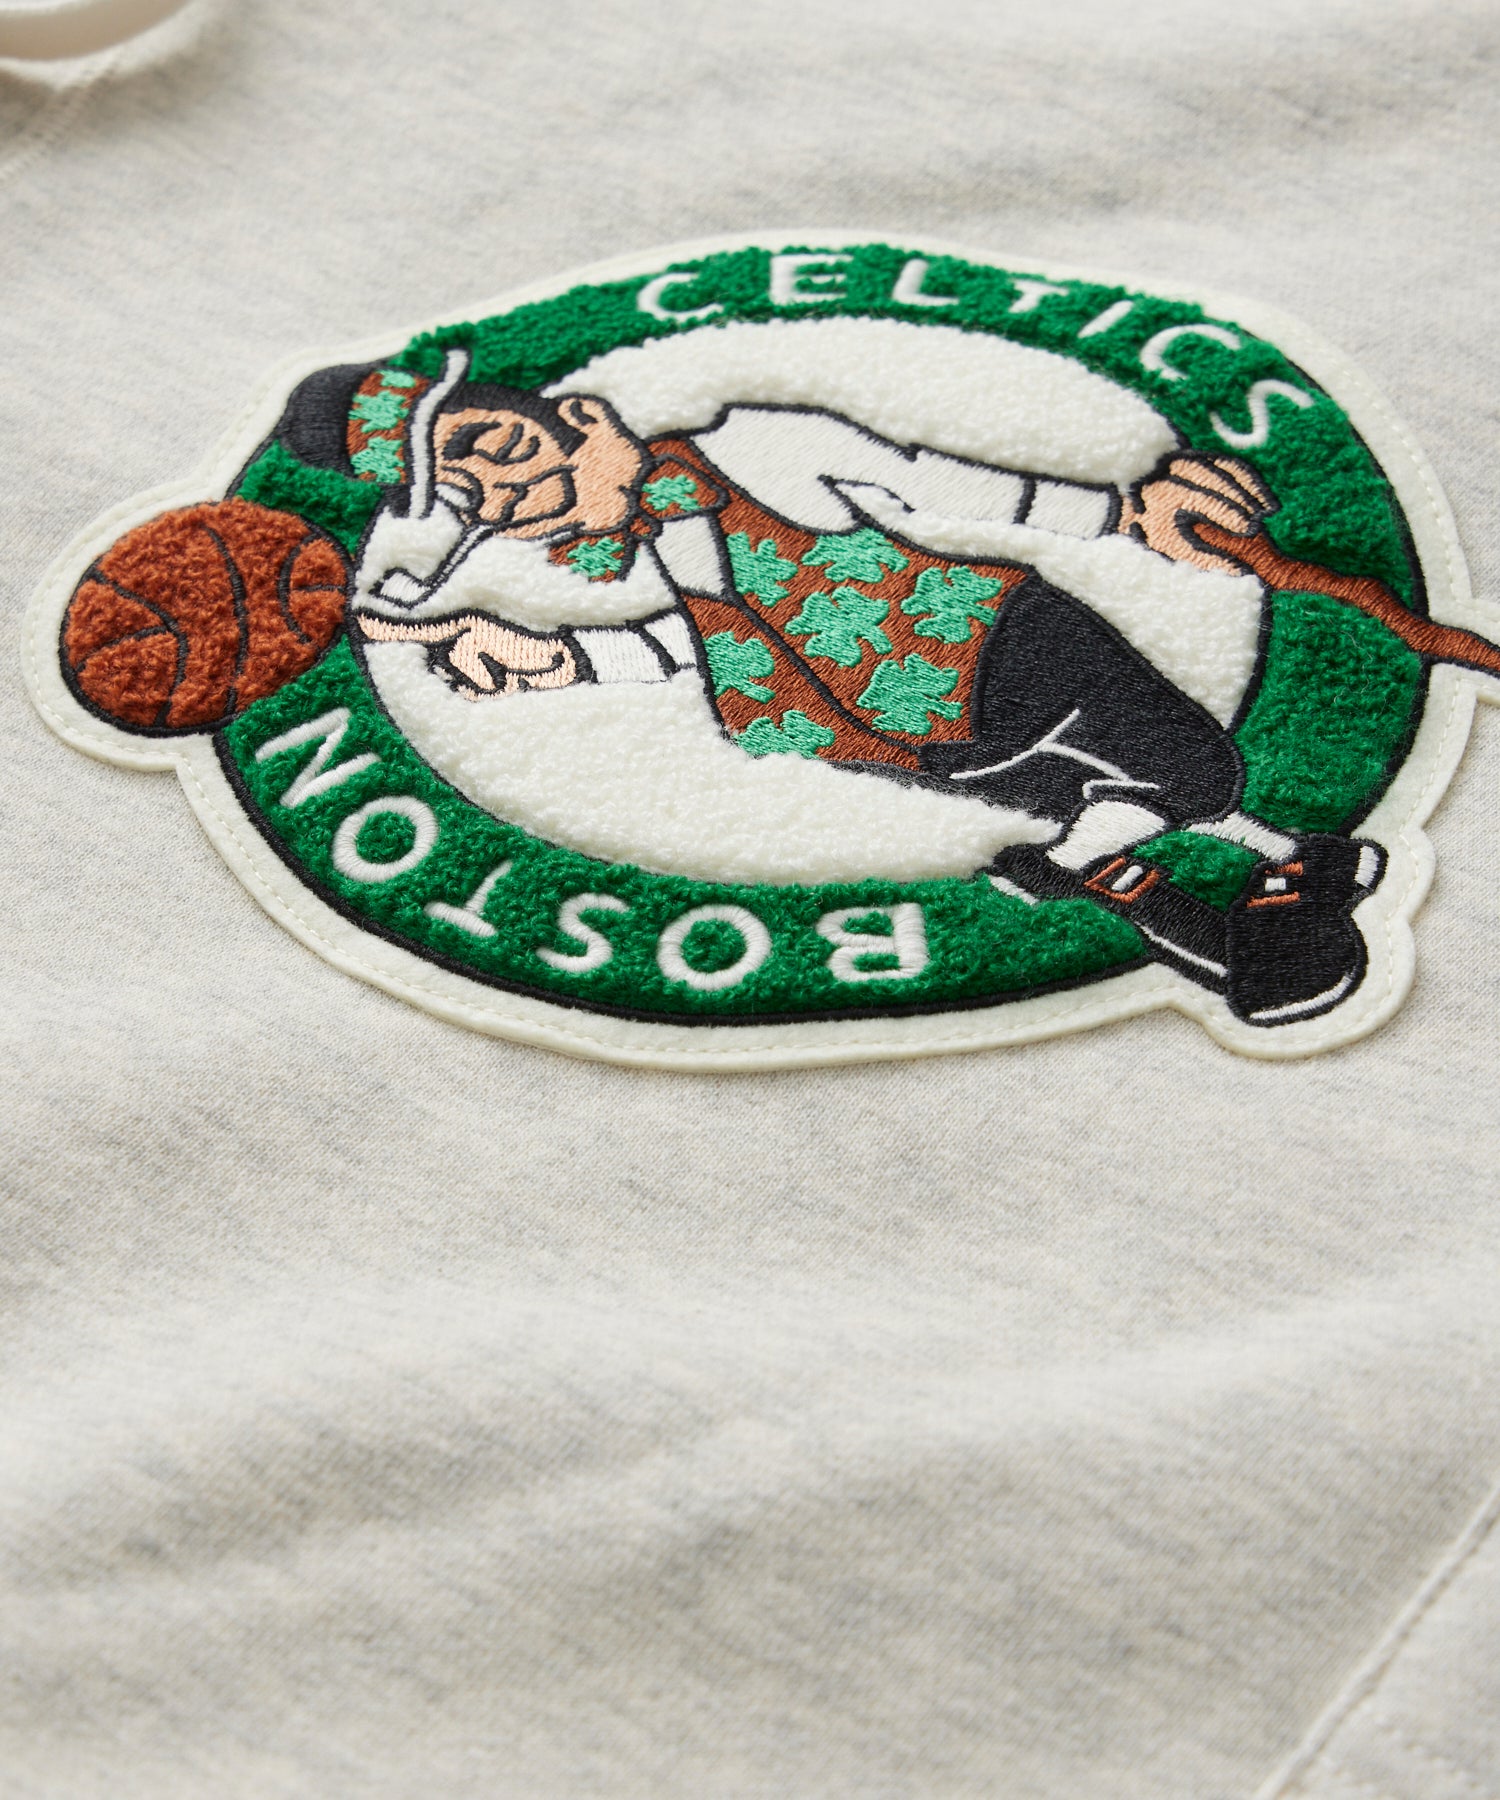 Boston Celtics Hoodies & Sweatshirts